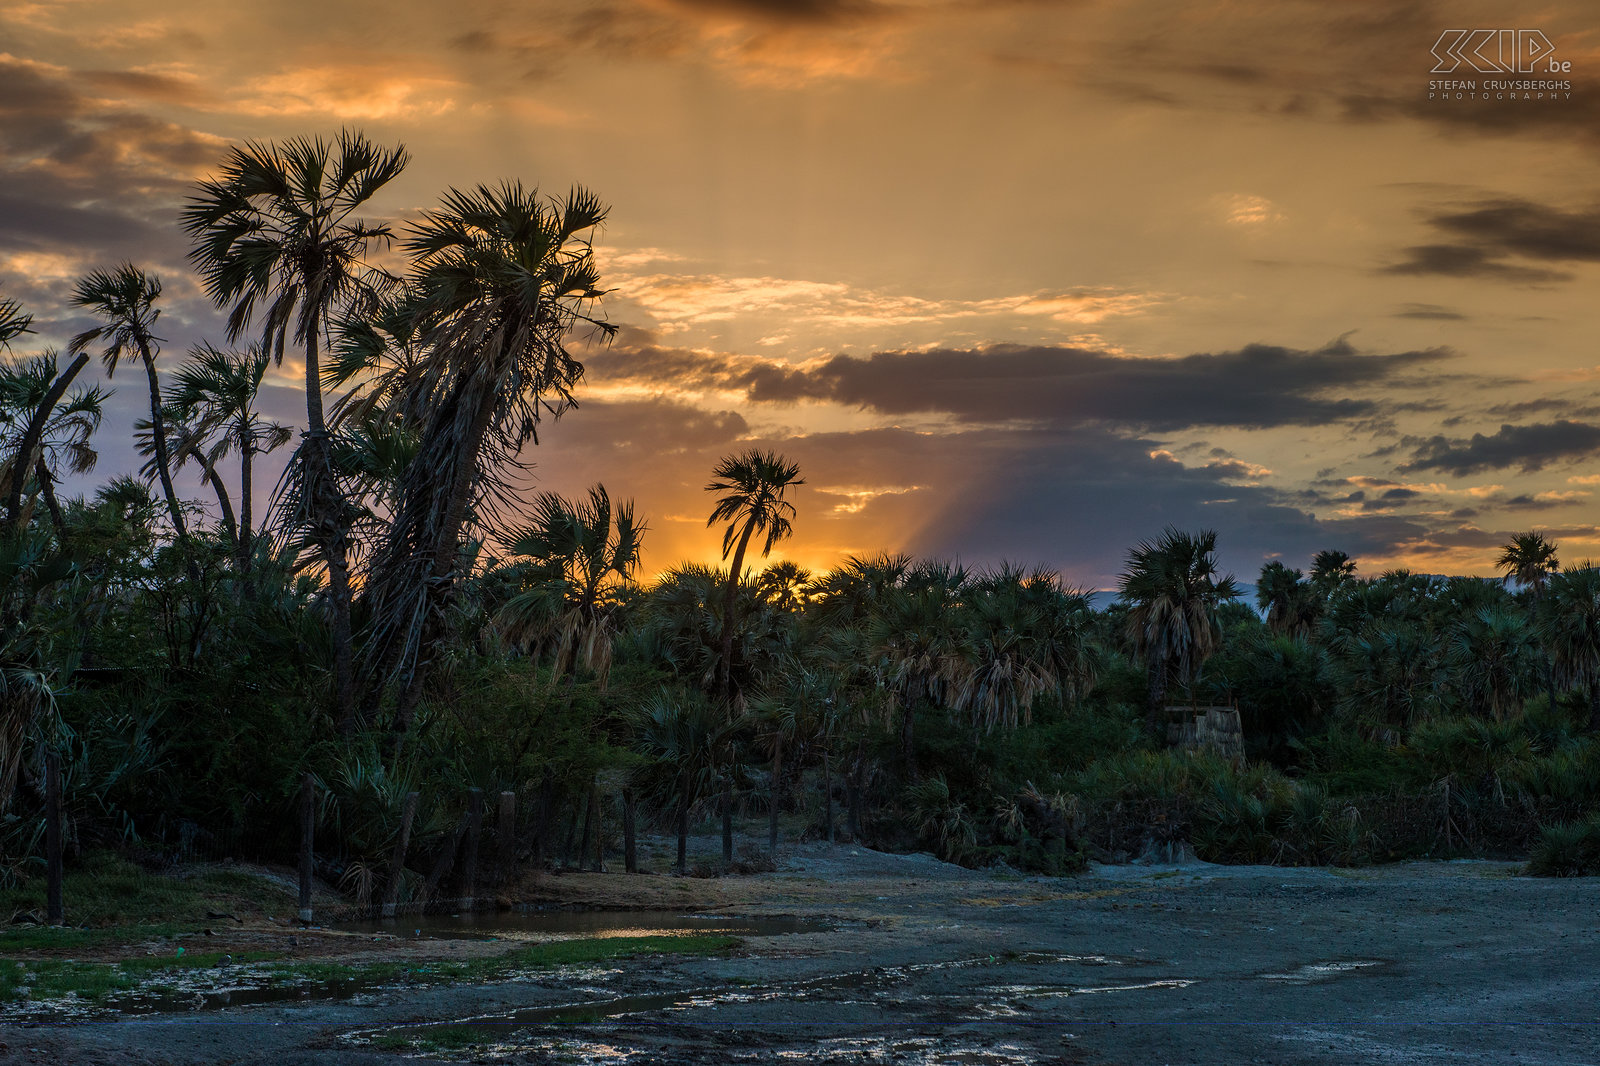 Loiyangalani - Sunrise Fantastic sunrise in the palm oasis of Loiyangalani. Stefan Cruysberghs